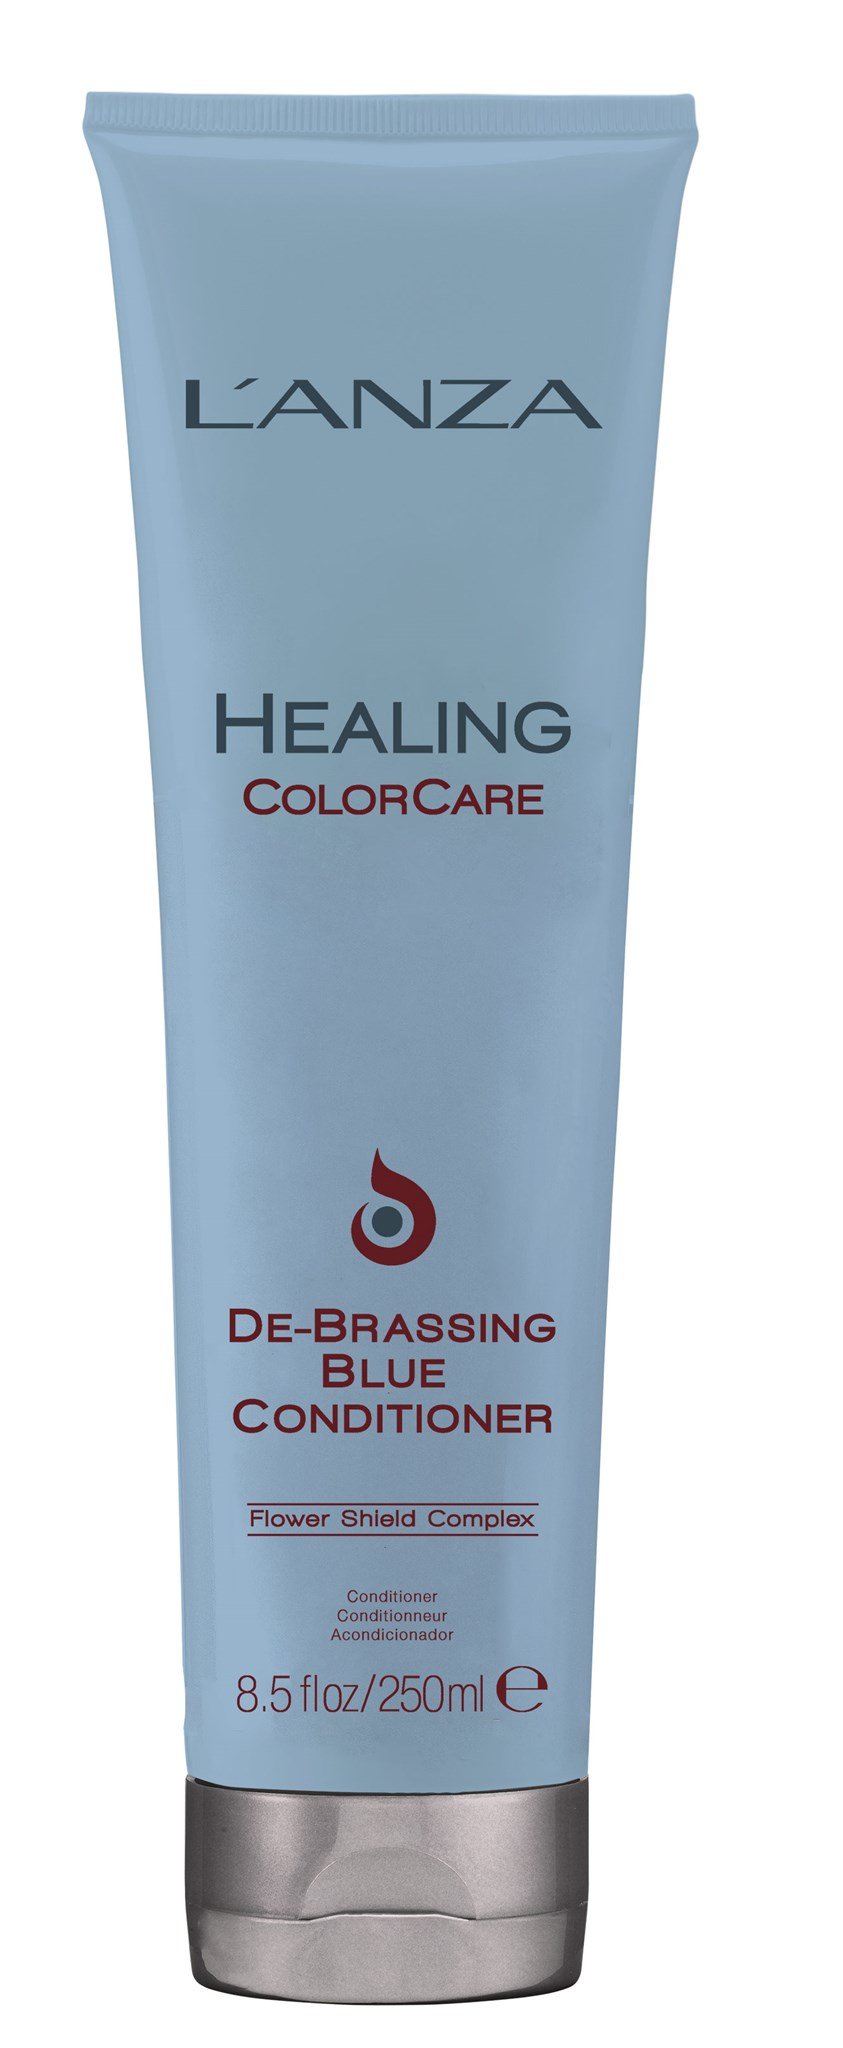 Lanza Healing ColorCare De-Brassing Blue Conditioner 250ml